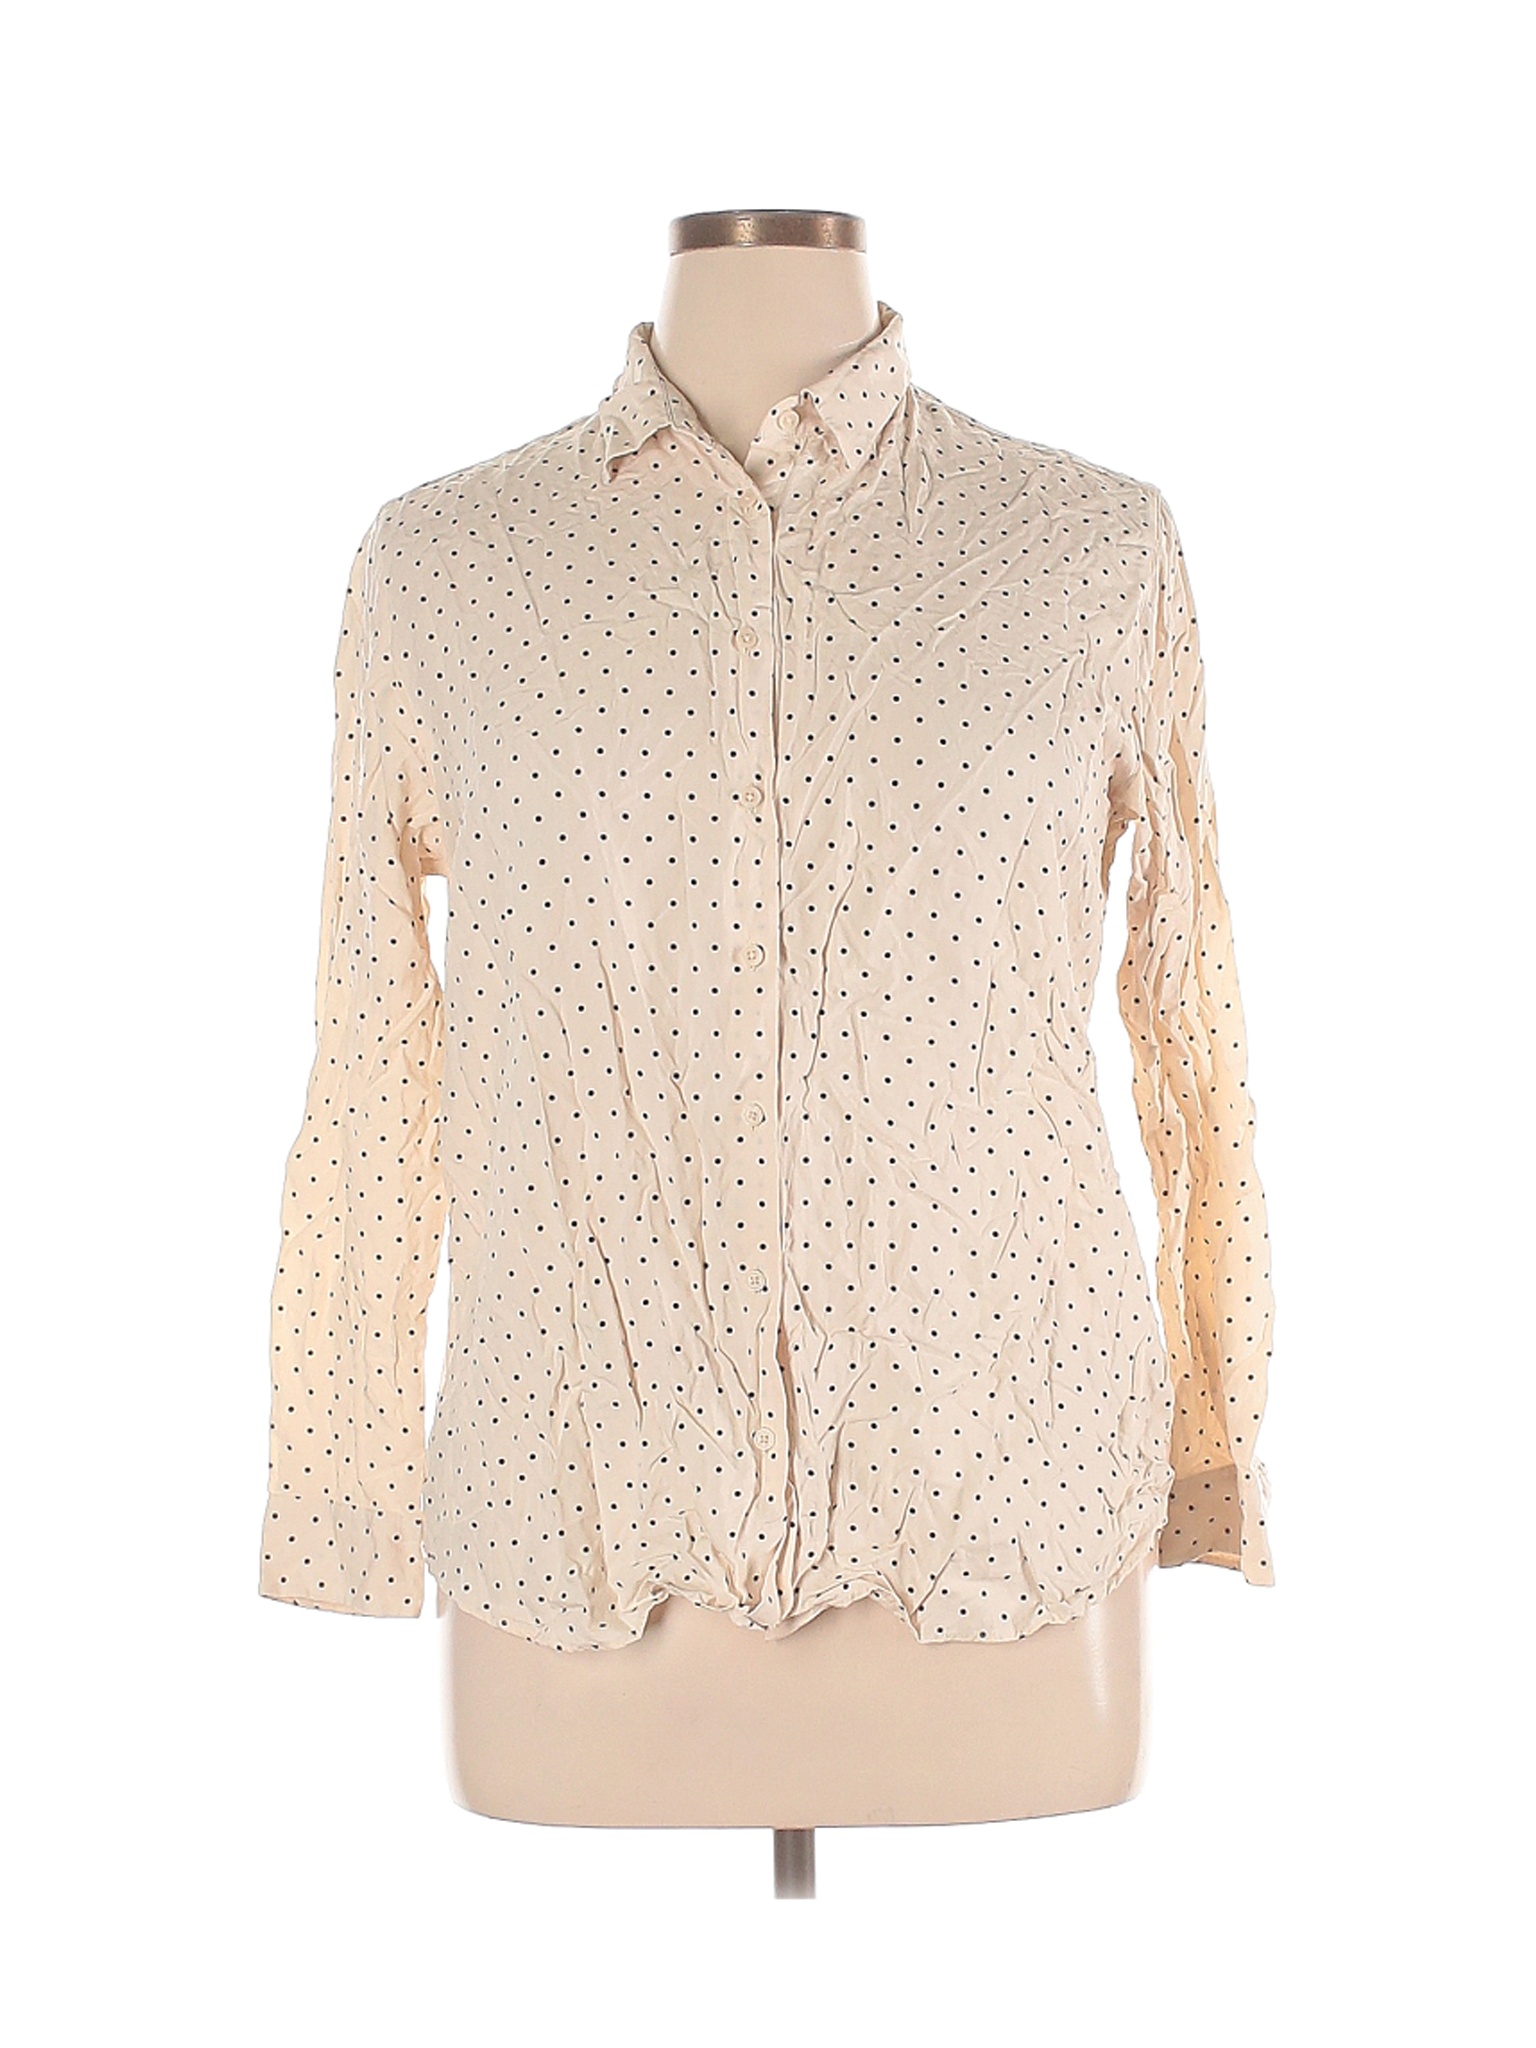 Uniqlo Women Brown Long Sleeve Button-Down Shirt XL | eBay